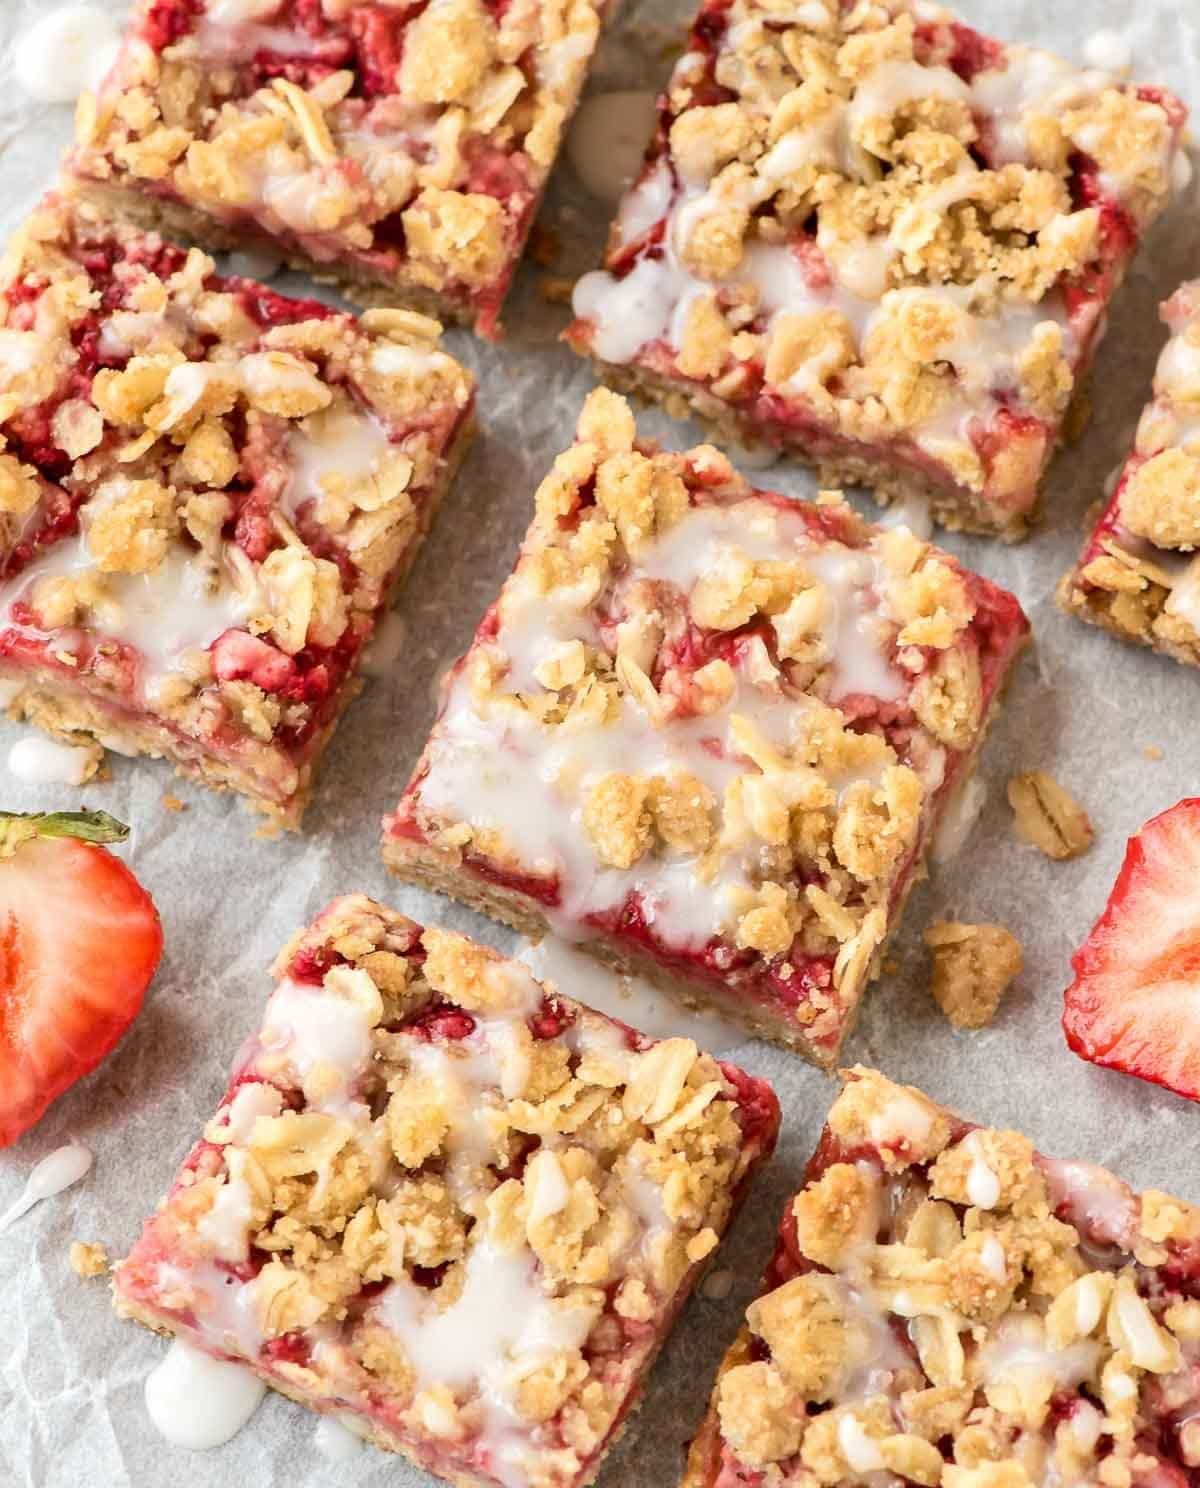 Strawberry Dessert Healthy
 Healthy Strawberry Oatmeal Bars Recipe